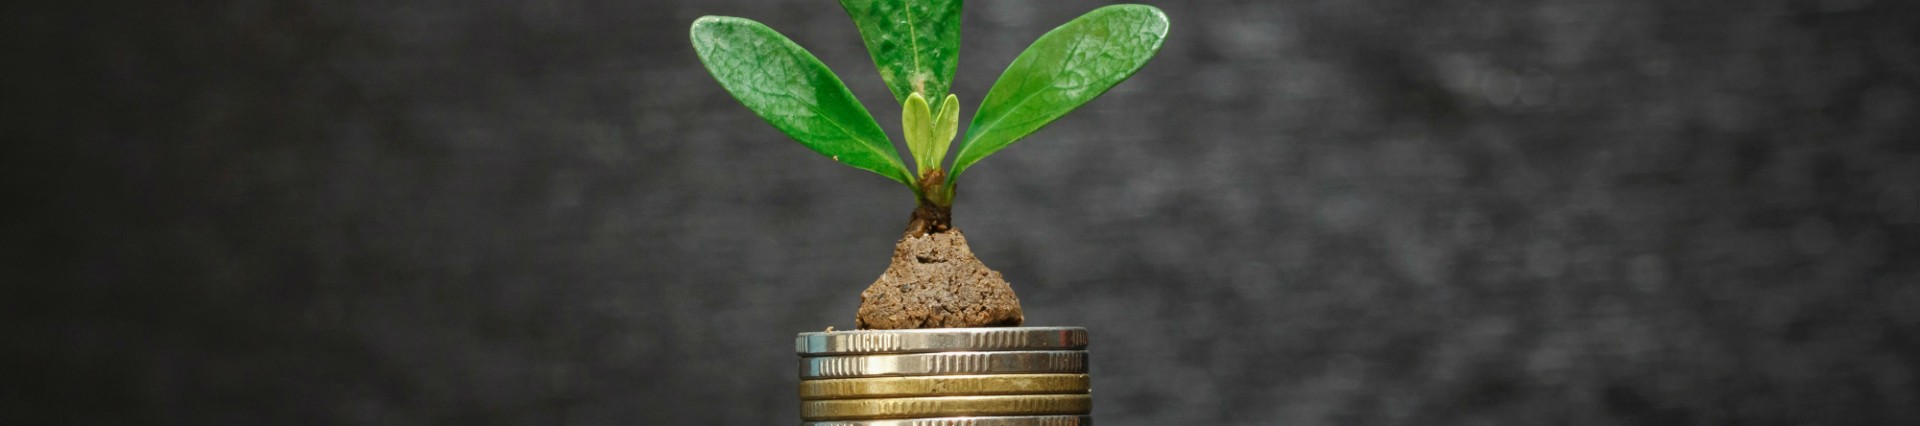 Money tree growth